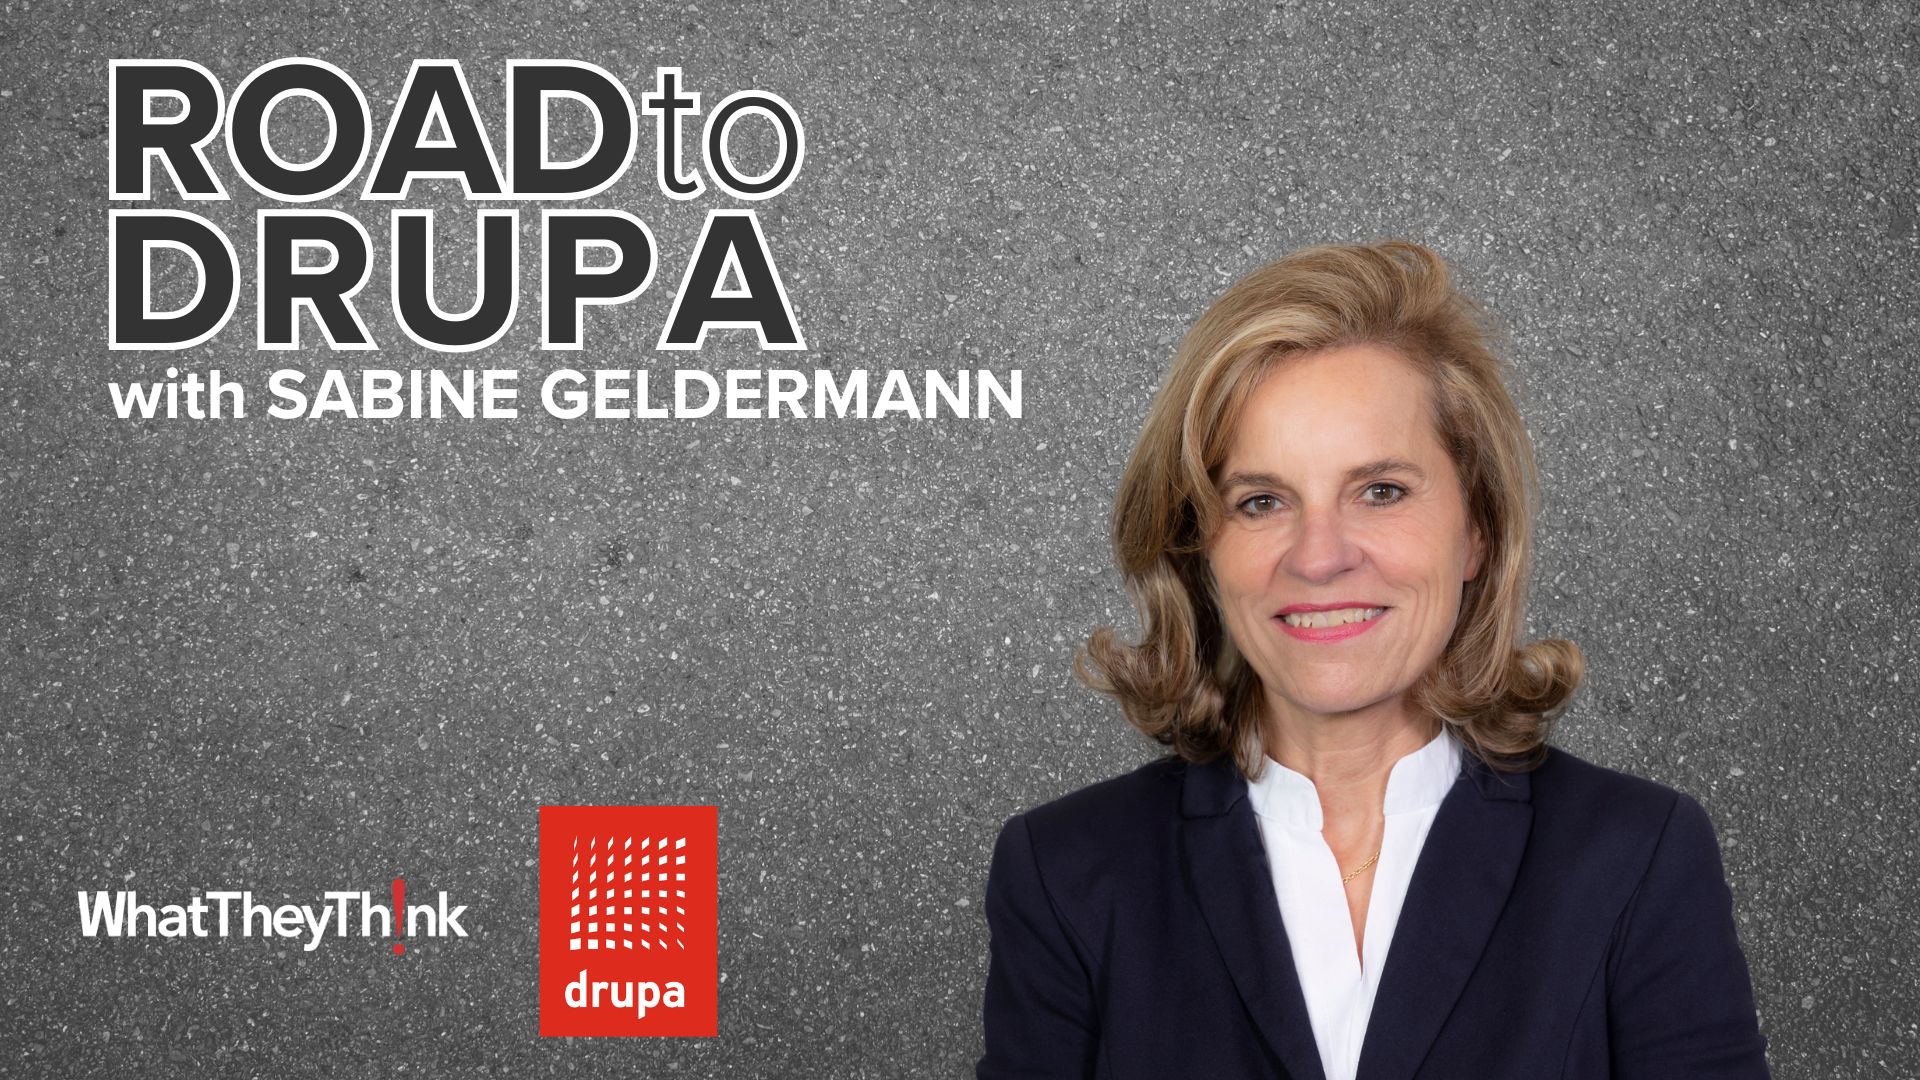 Road to drupa: Messe Düsseldorf's Sabine Geldermann Previews the Upcoming Event